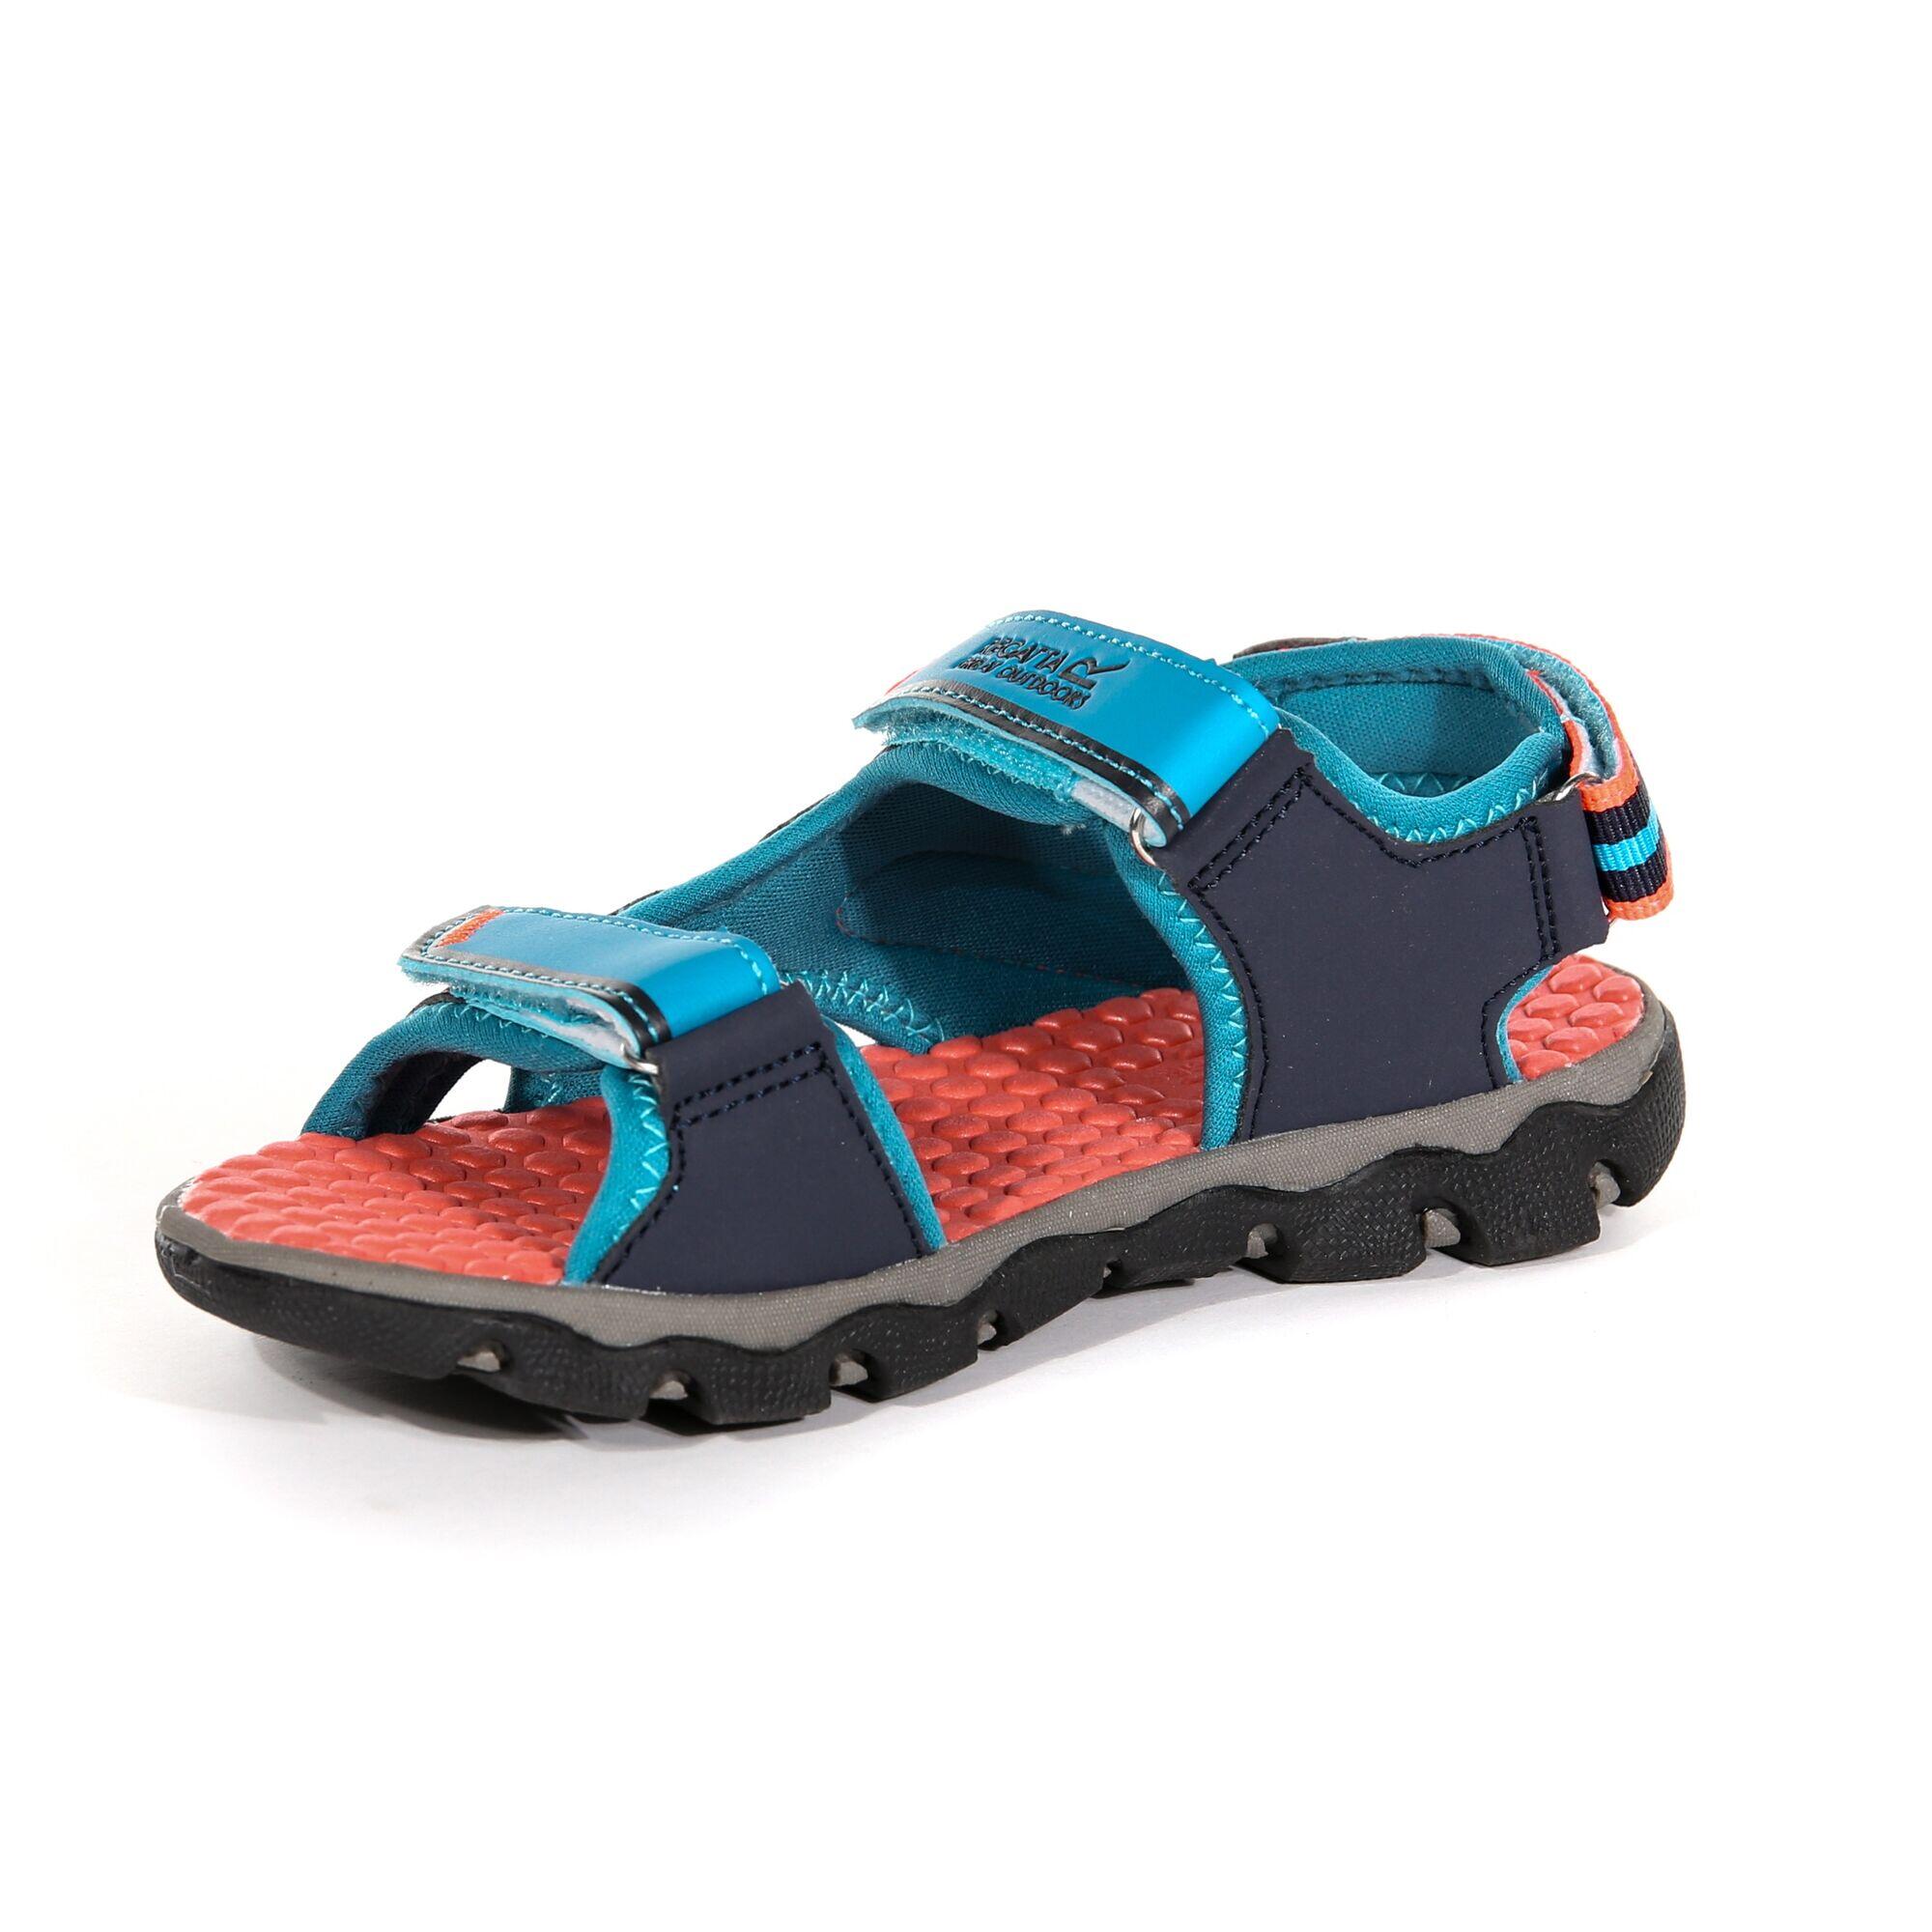 Kota Drift Junior Kids Walking Sandals - Enamel Blue / Pink 4/7